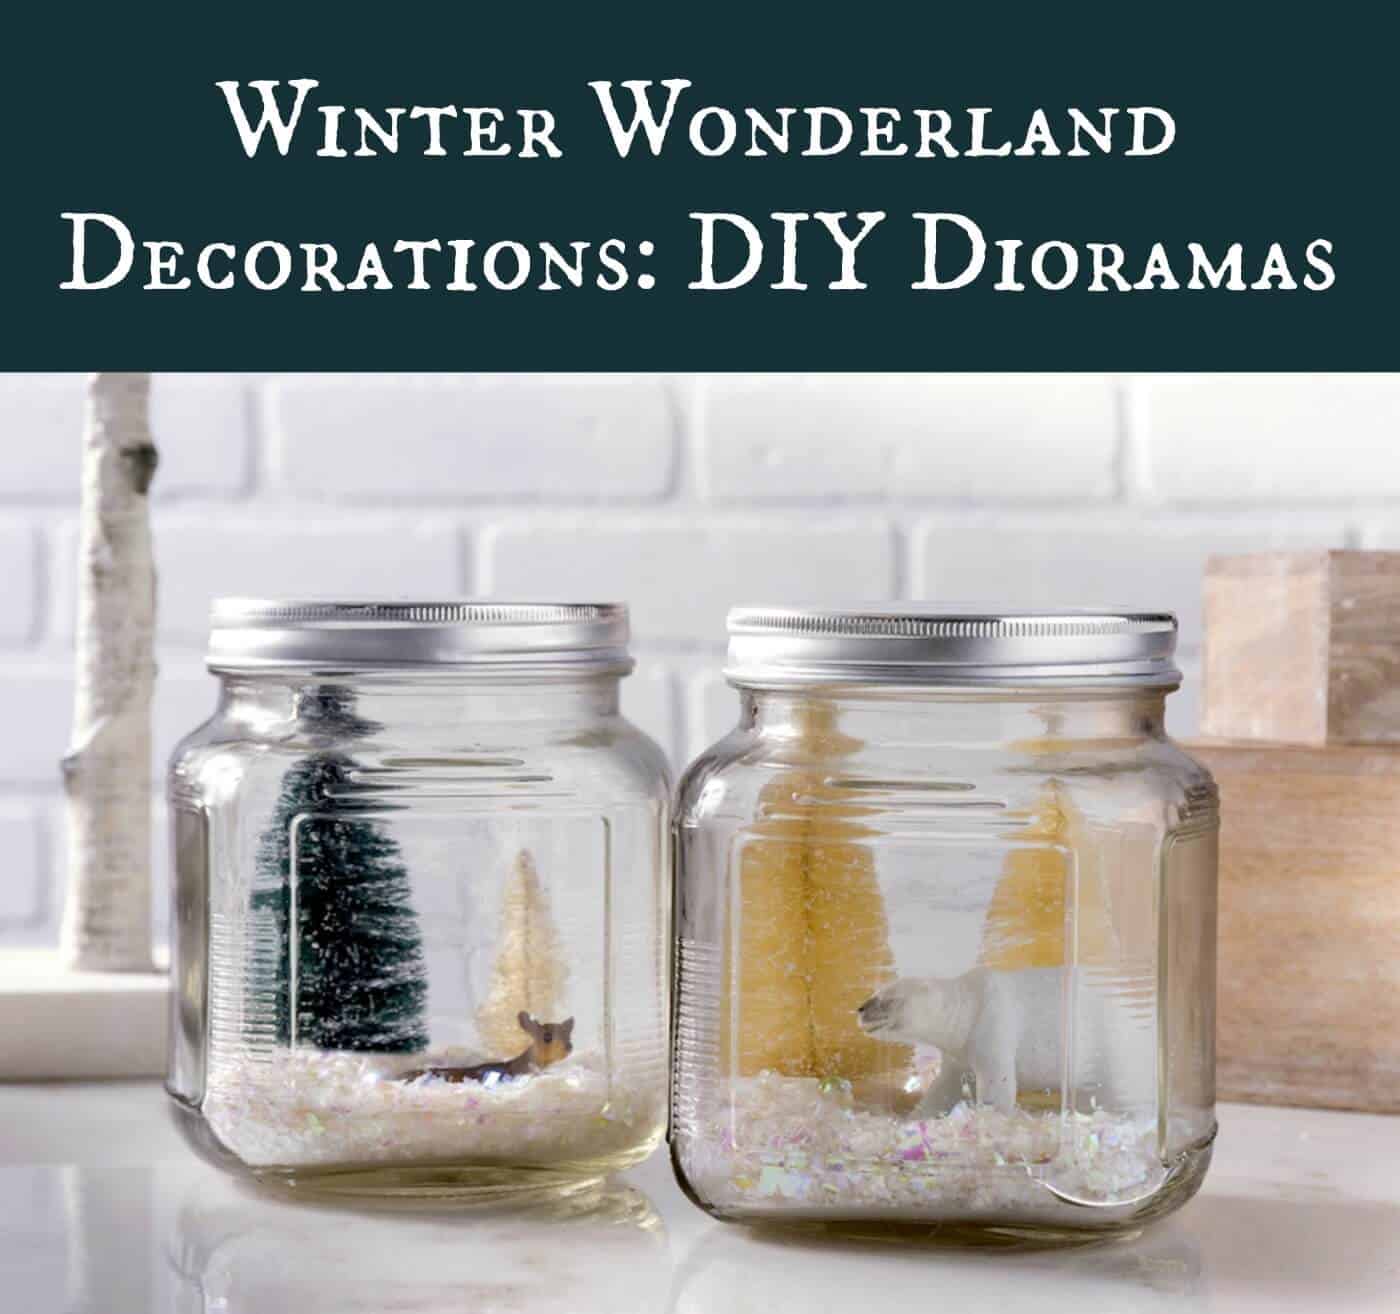 Winter Wonderland Decorations Made with Glass Jars